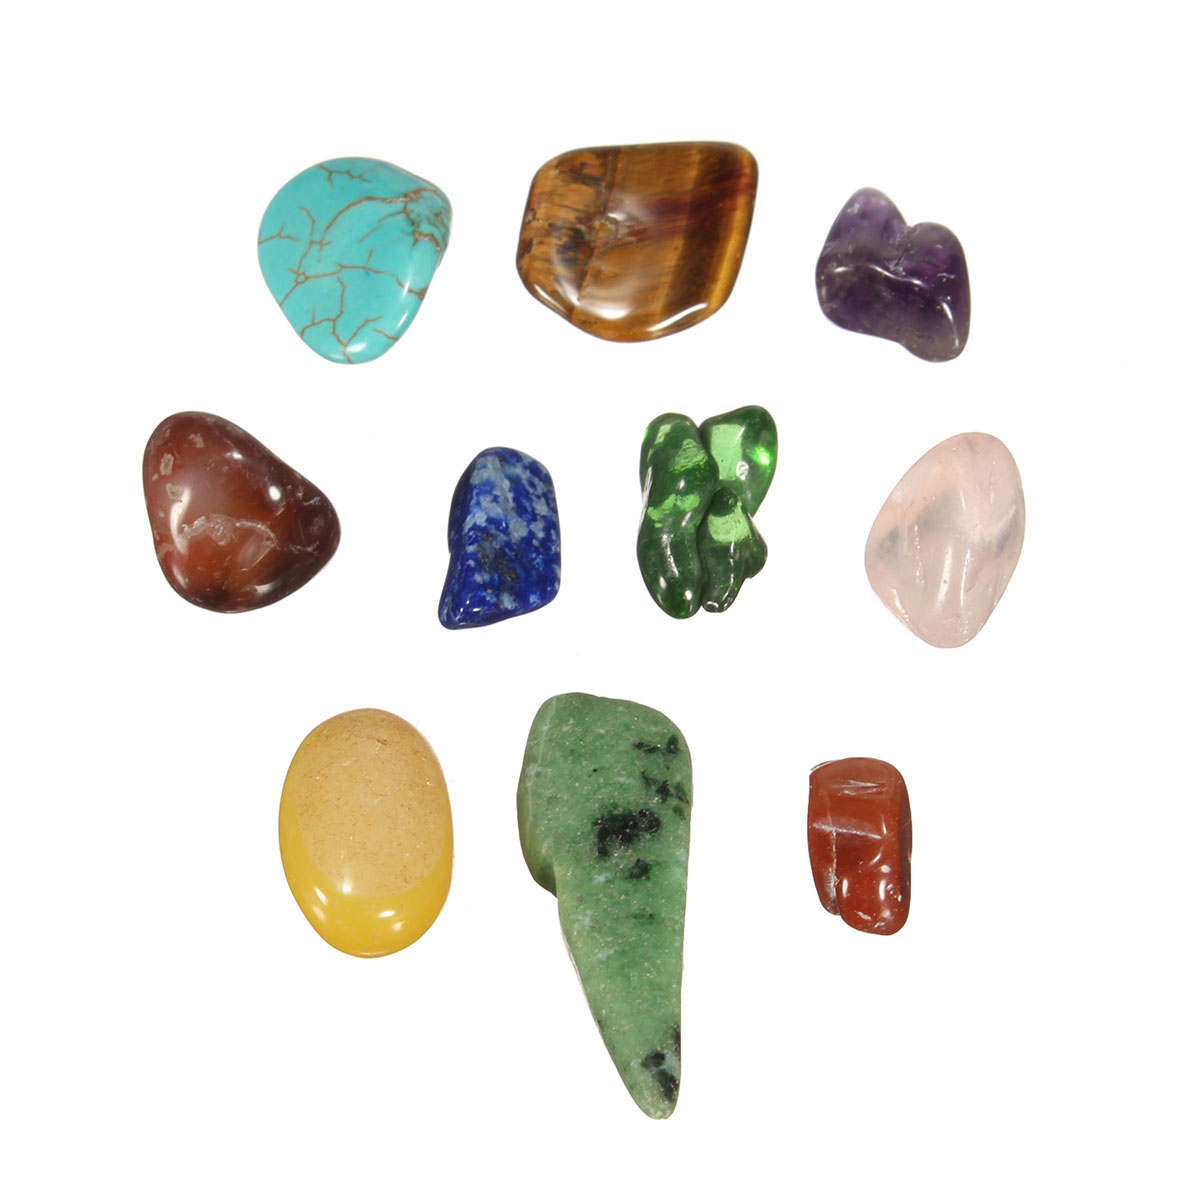 Set 10 Kinds Stone Chakras Crystal Healing Tumbled Natural Quartz Crystal Stones Minerals Irregular Shape Decorative With Box